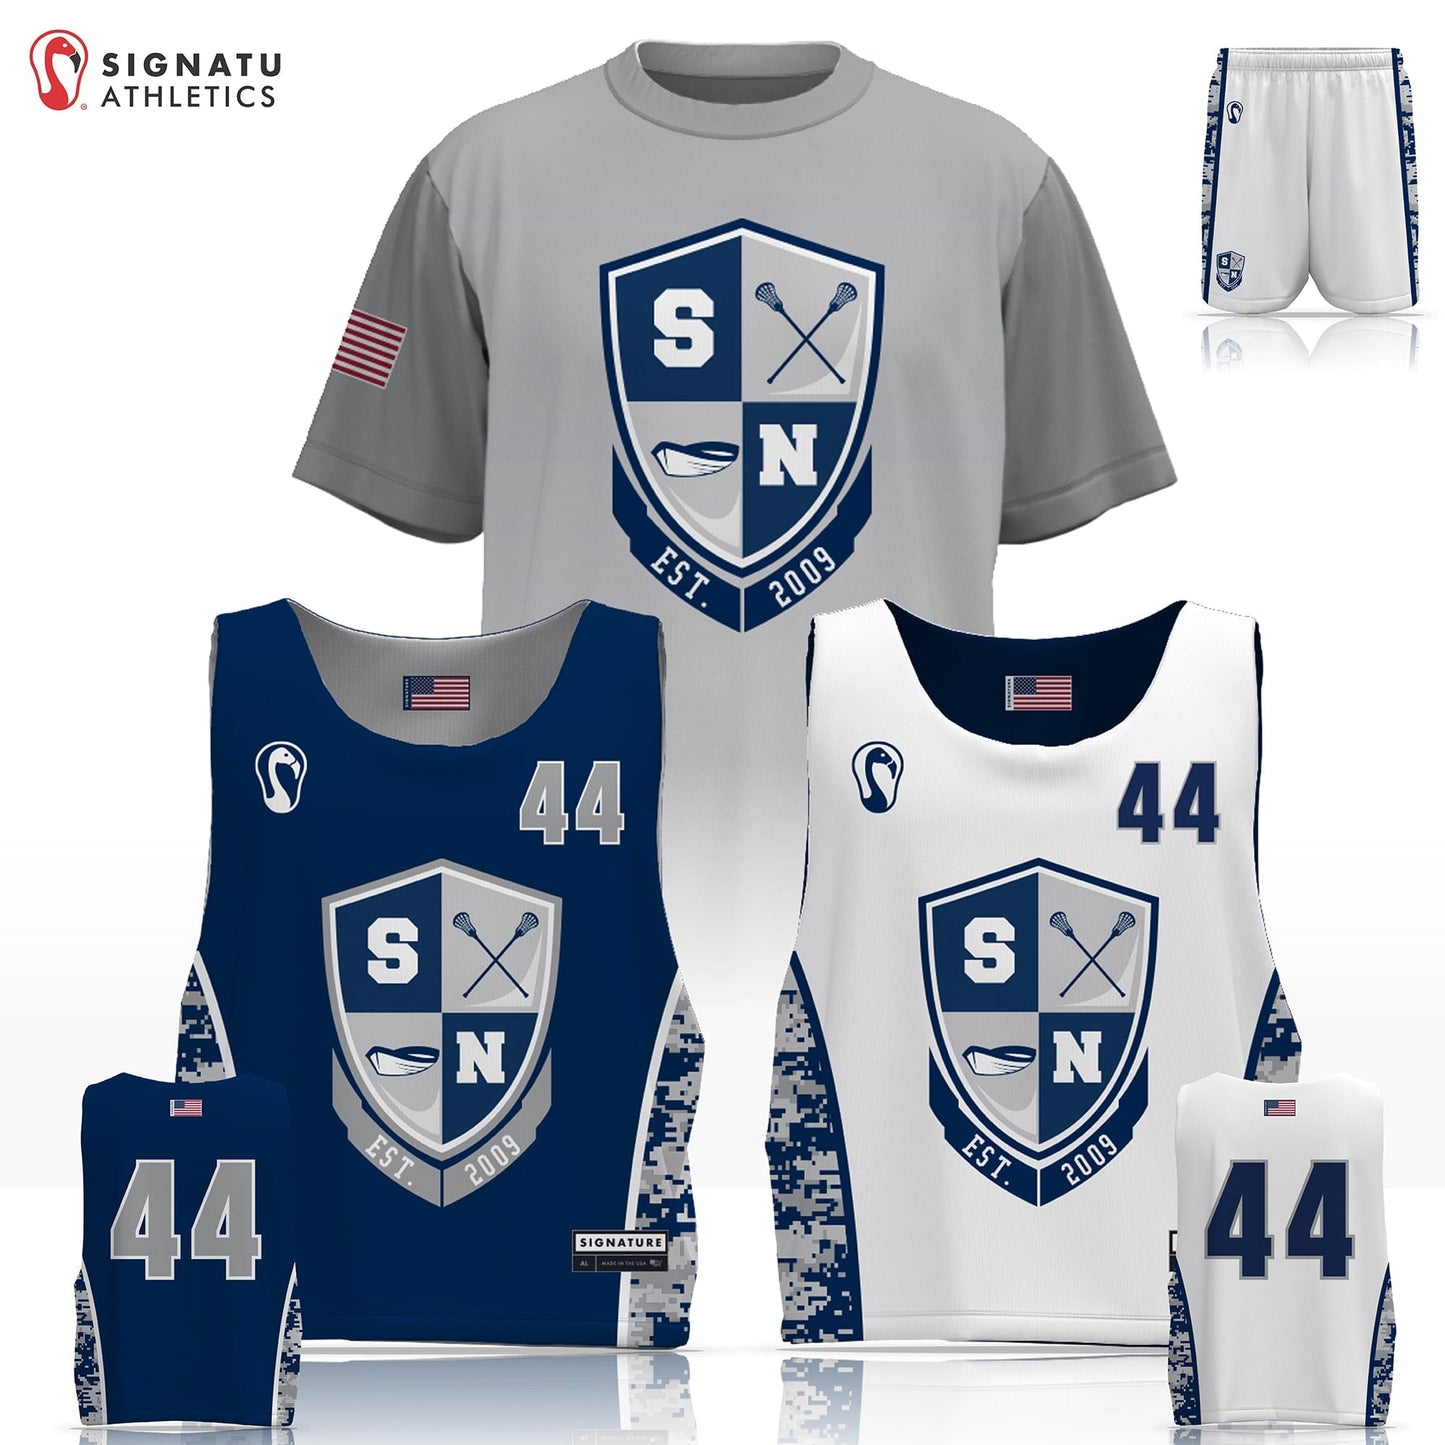 SNYL Team Swag Store Men's 3 Piece Uniform Set:Boys U15 Signature Lacrosse